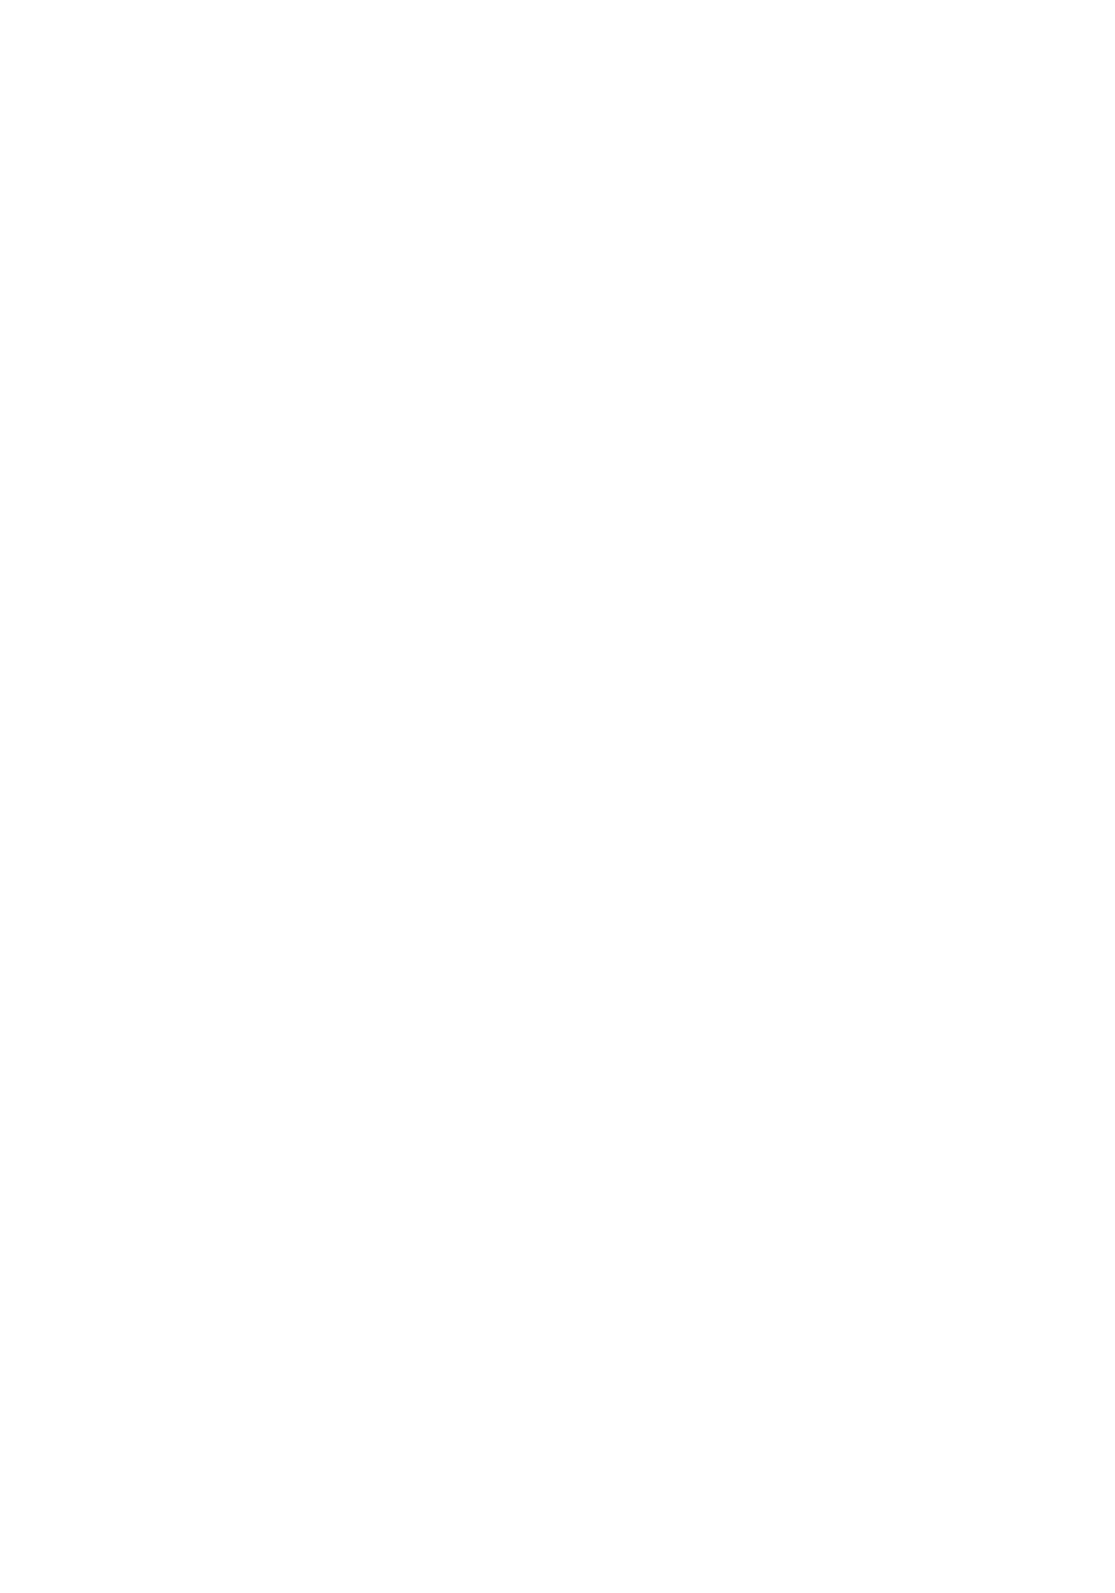 Al-Saif Stores for Development & Investment logo for dark backgrounds (transparent PNG)